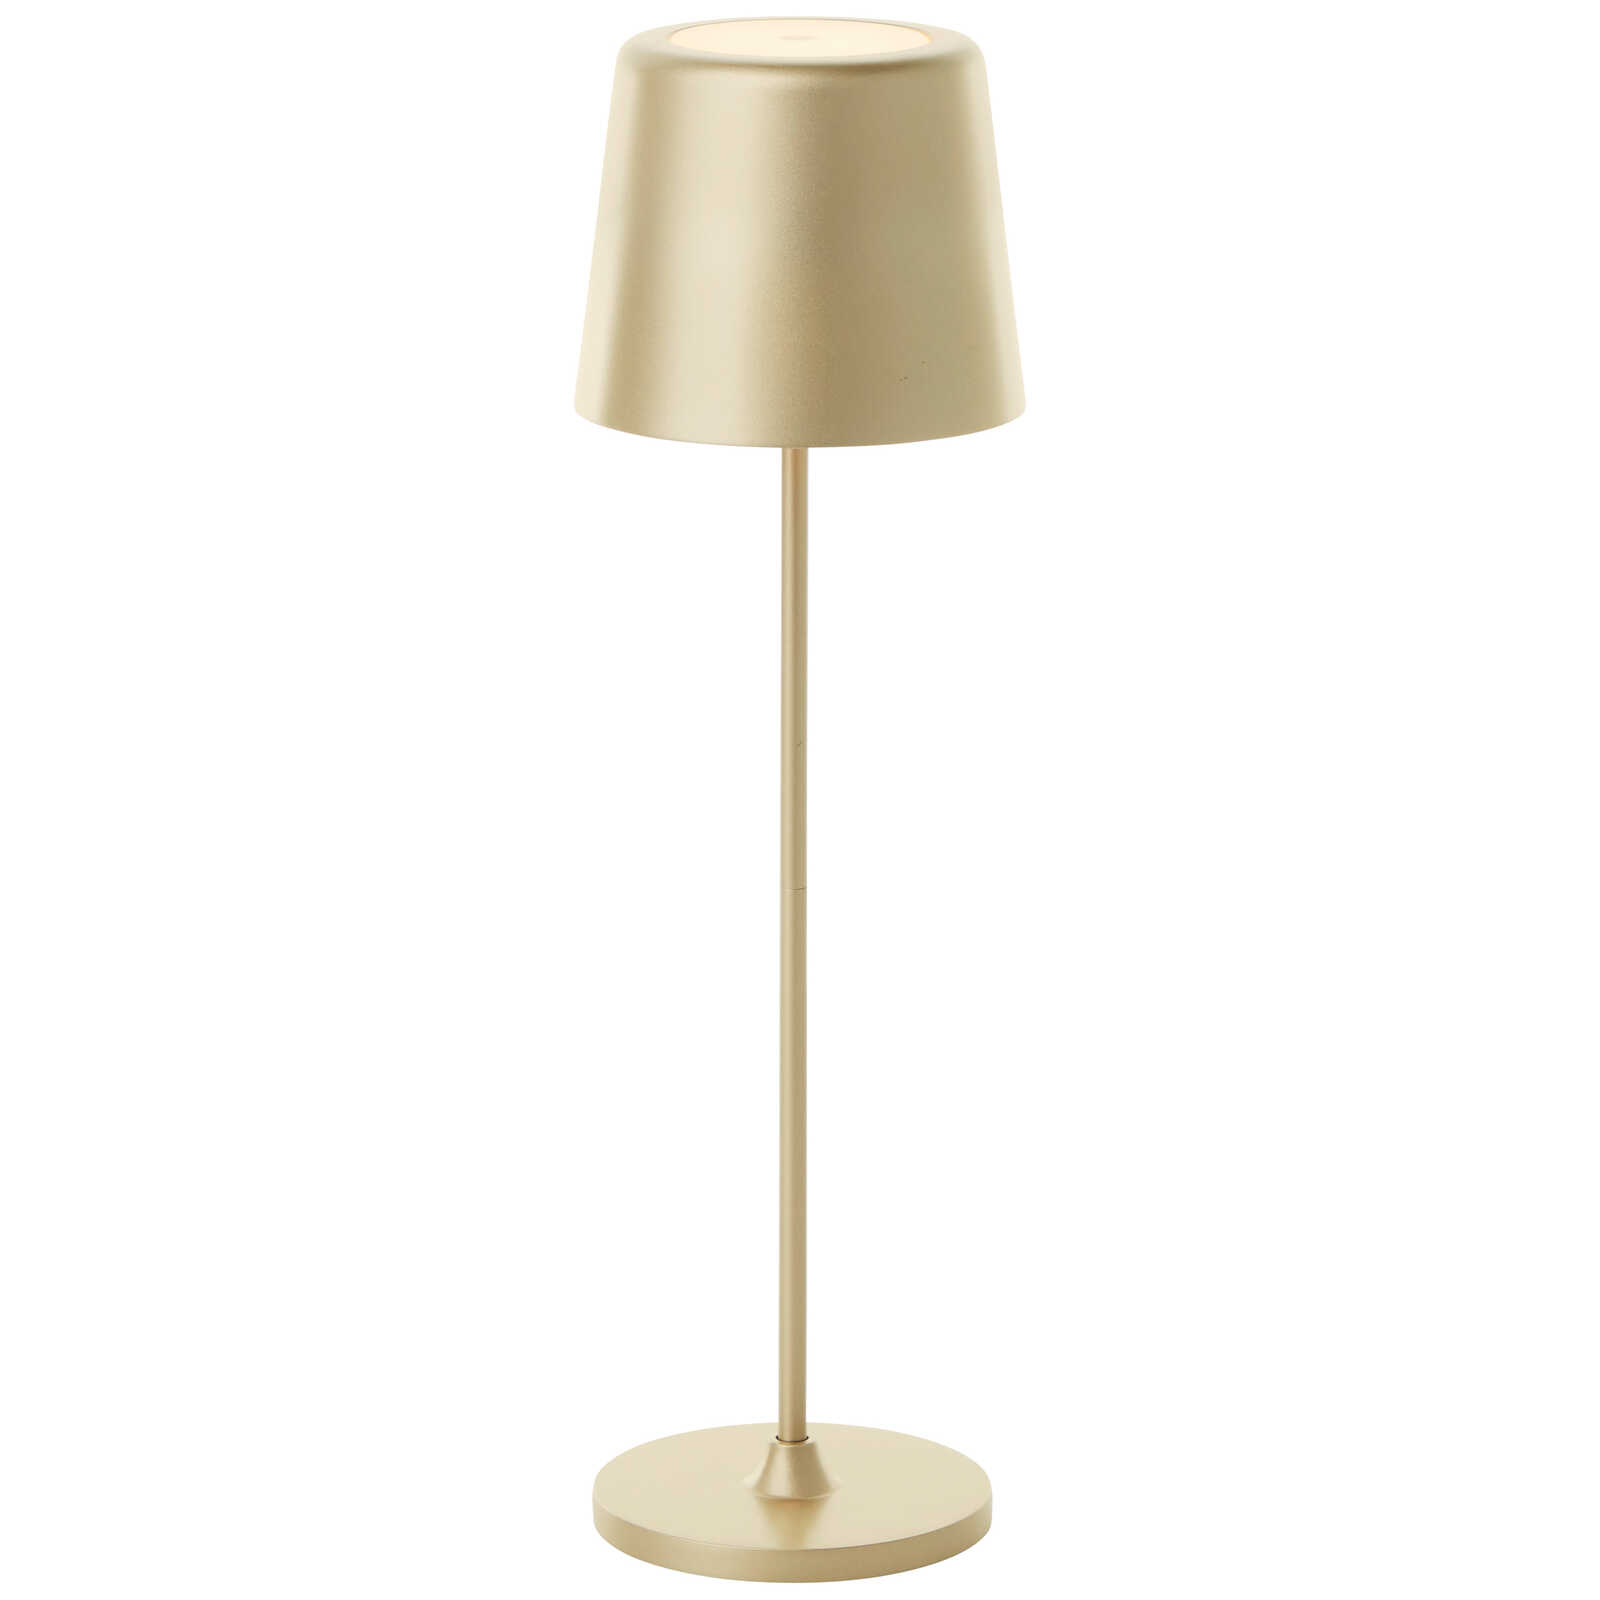             Lampe de table en métal - Cosy 2 - Gold
        